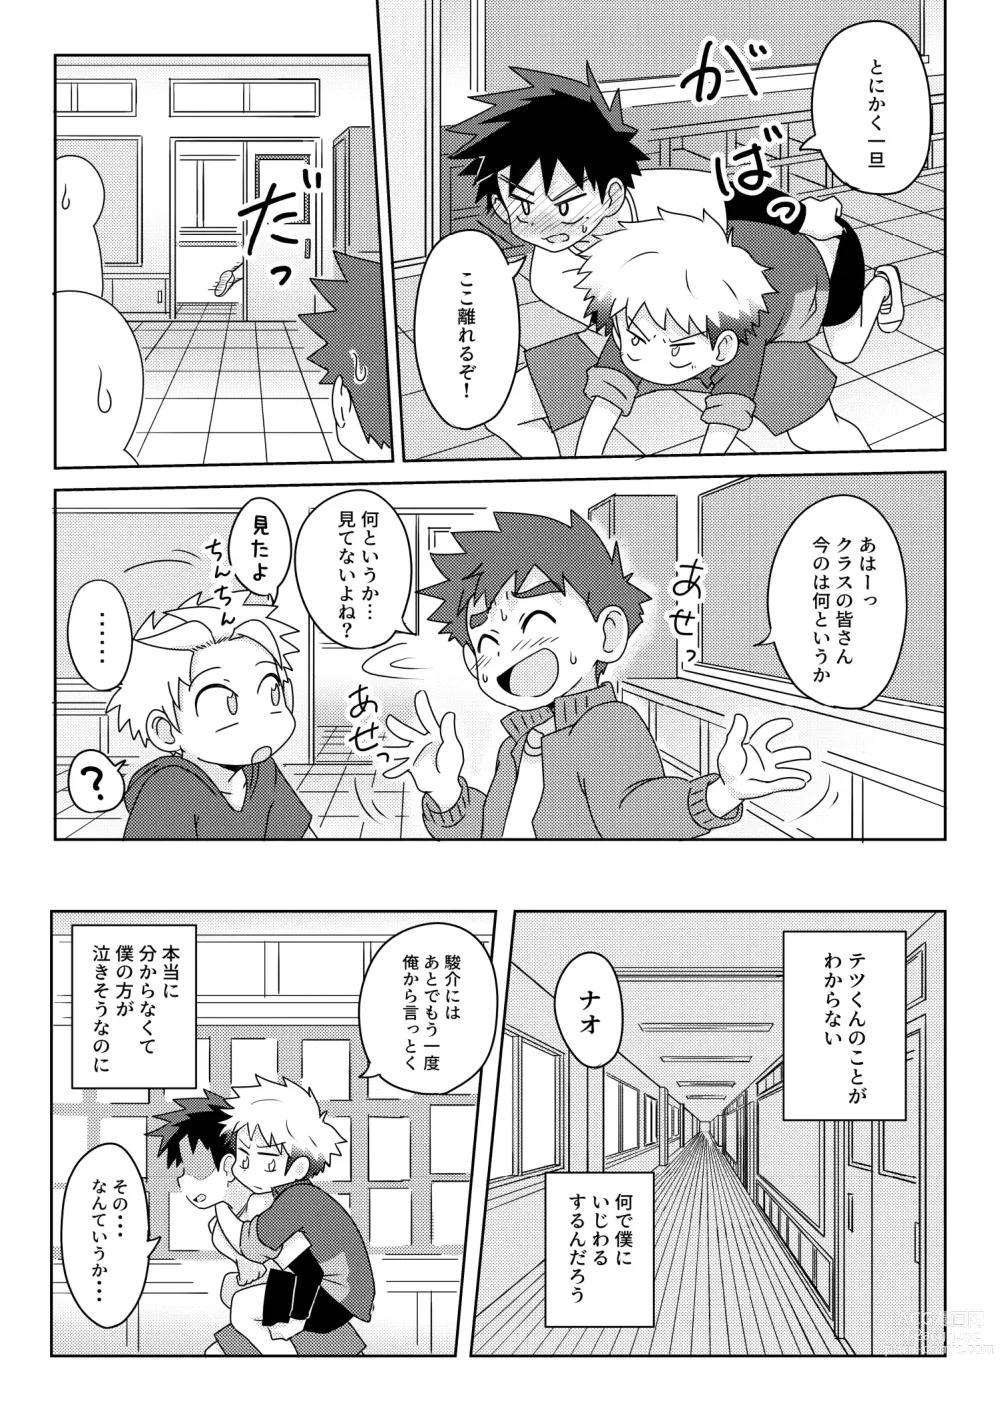 Page 29 of doujinshi Boku wa hanaya no musuko Introduction